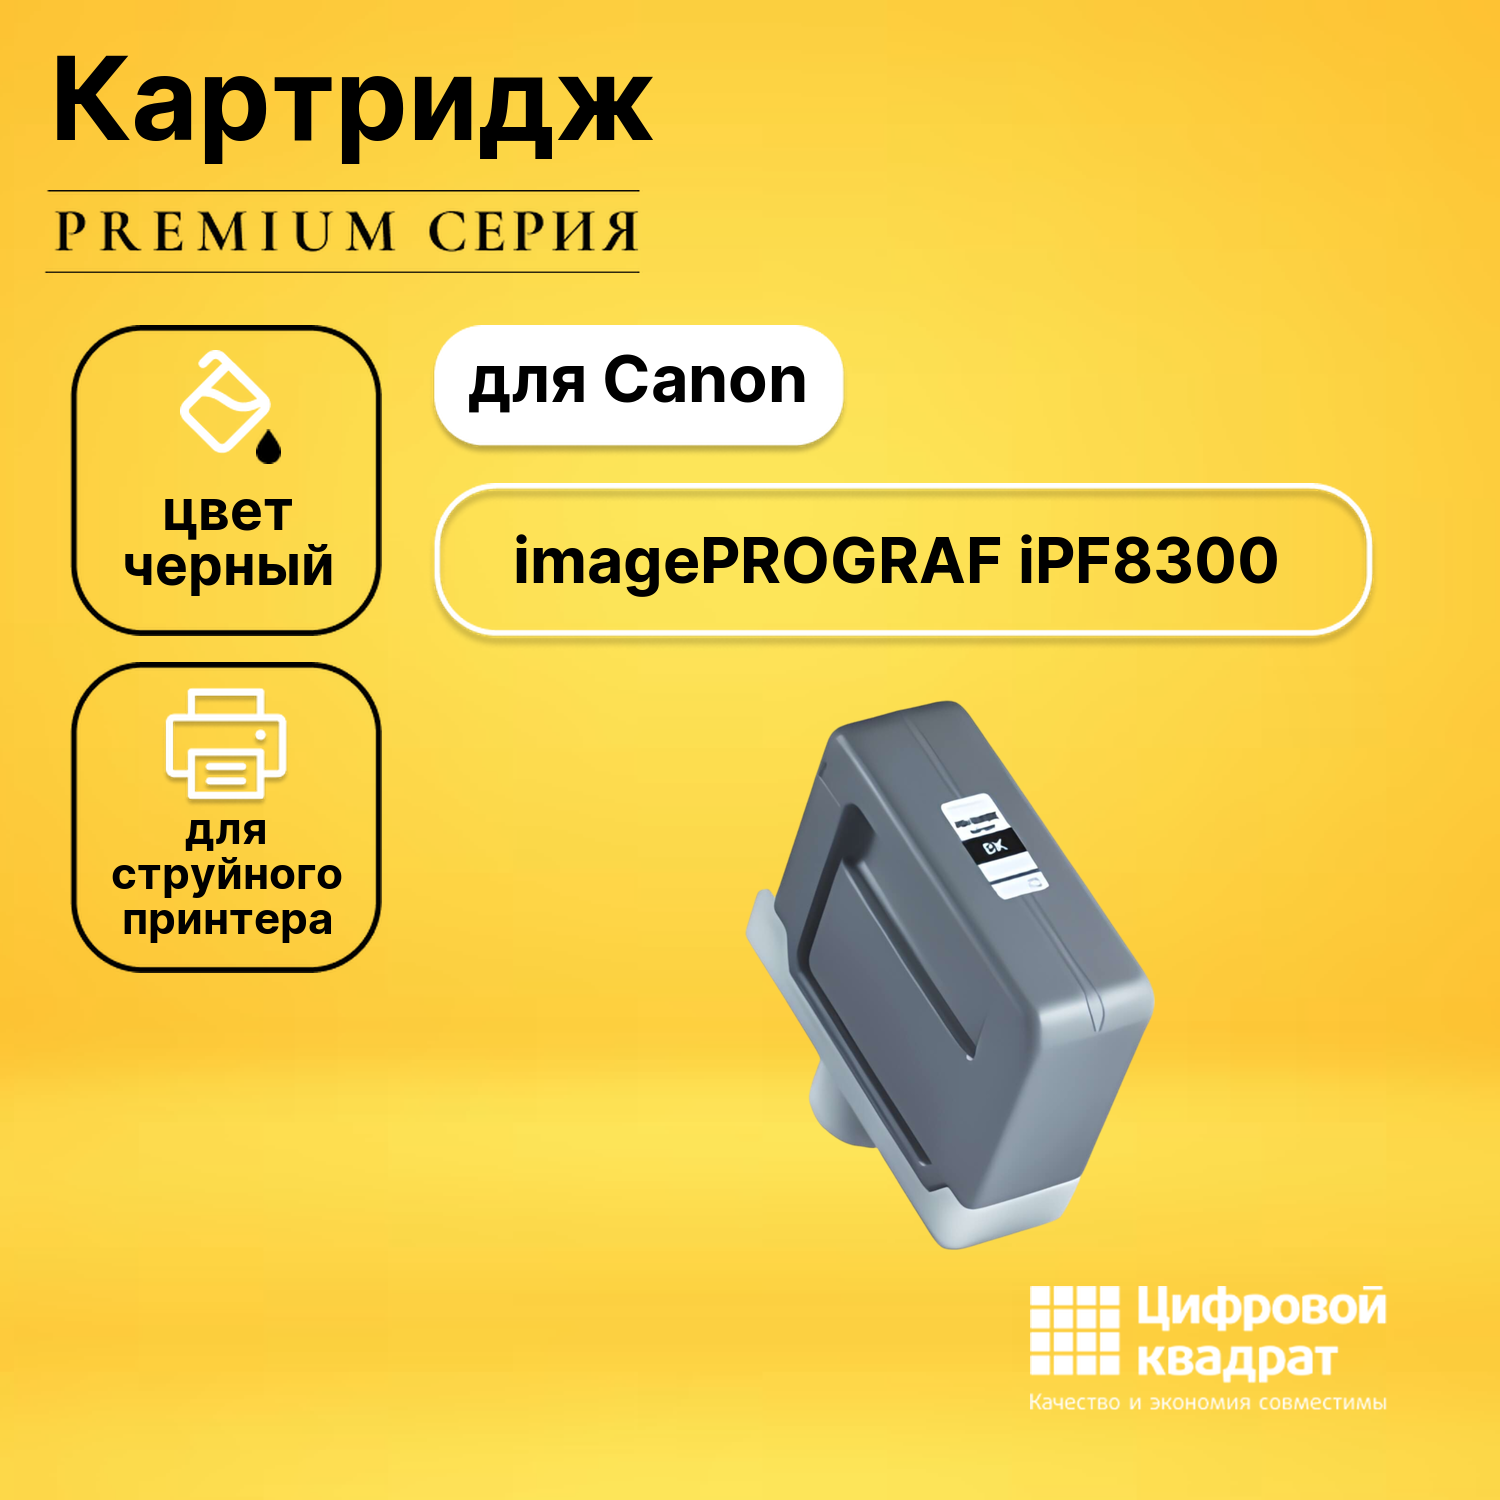 Картридж DS imagePROGRAF iPF8300